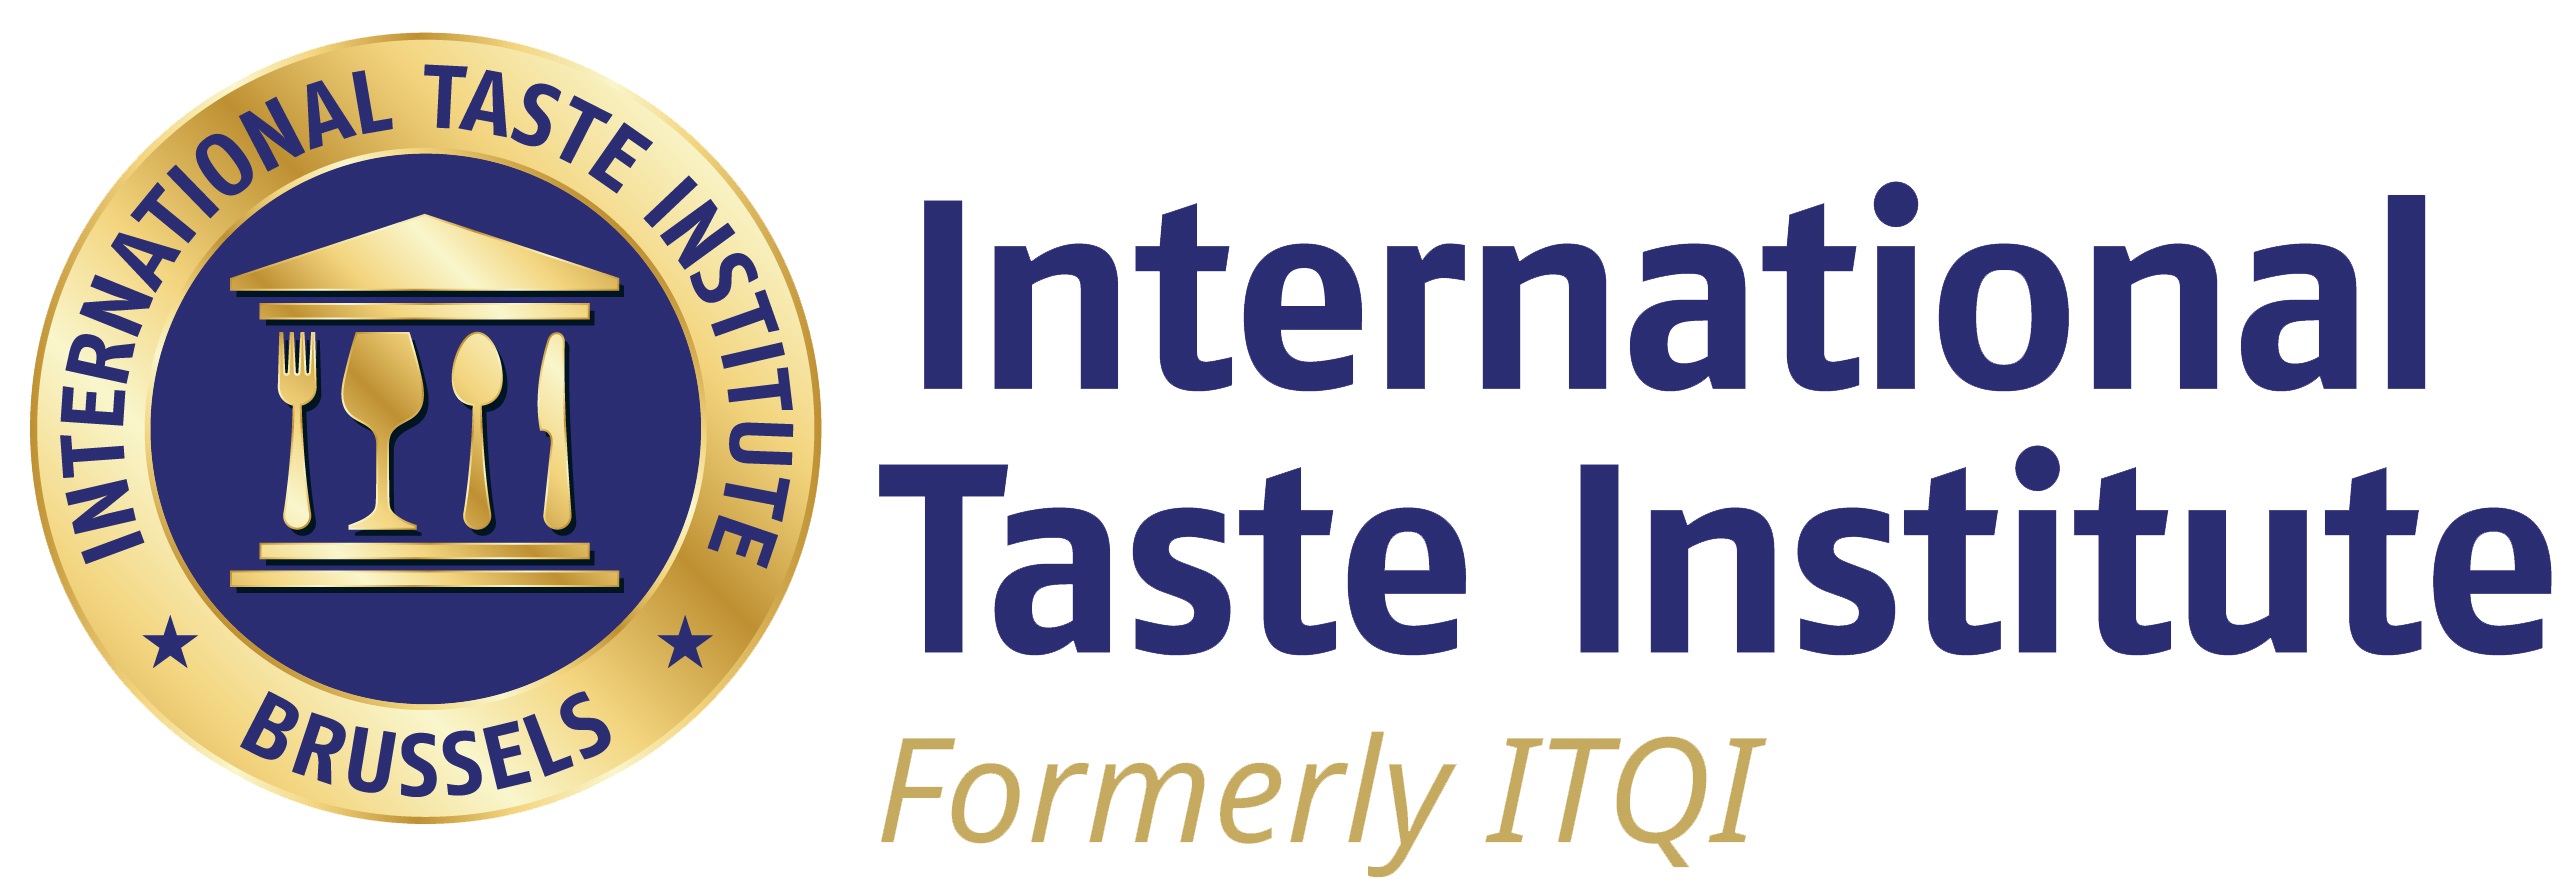 international taste institute